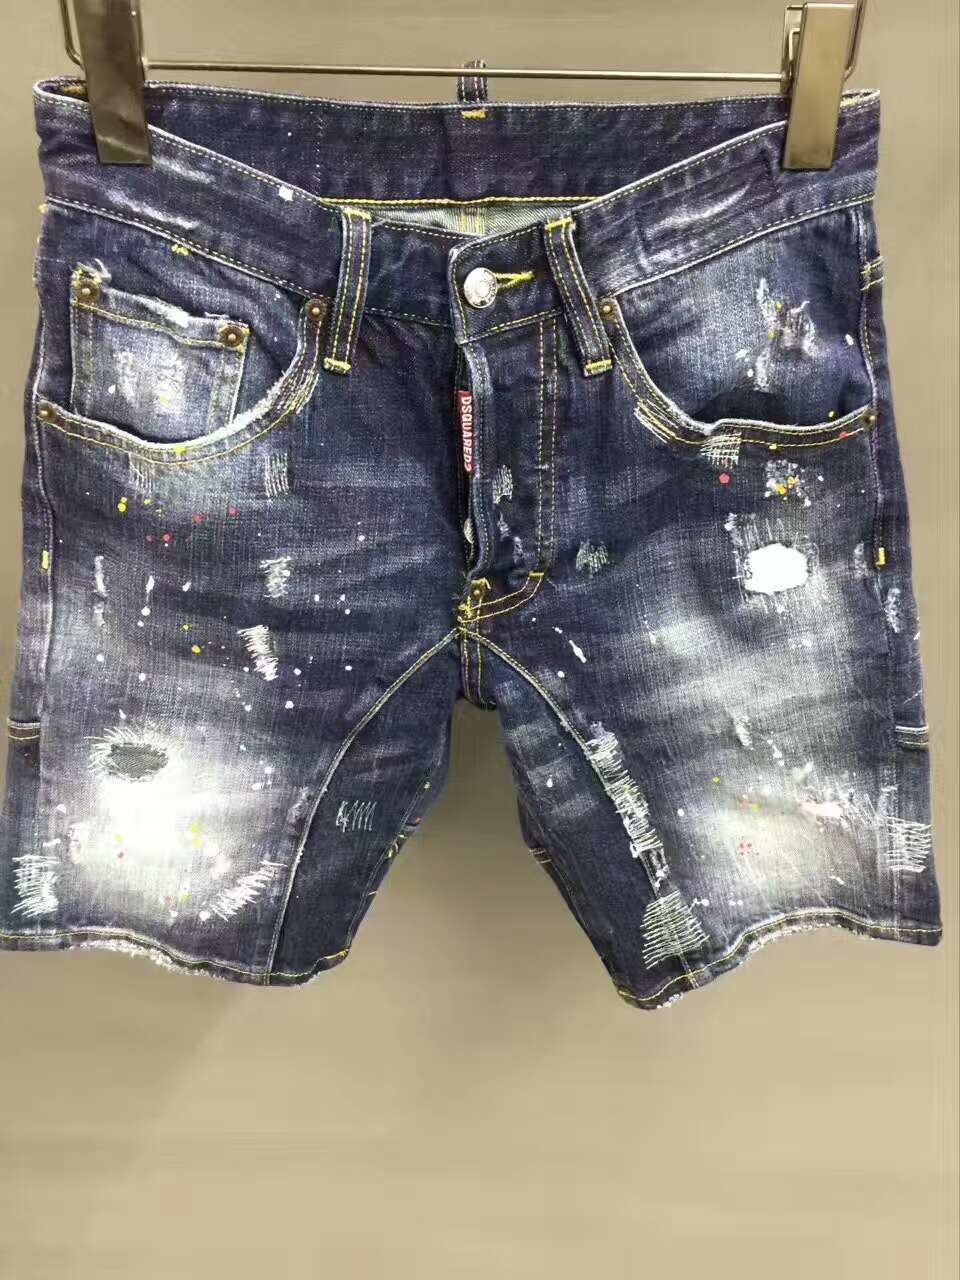 dsquared2 shorts sale